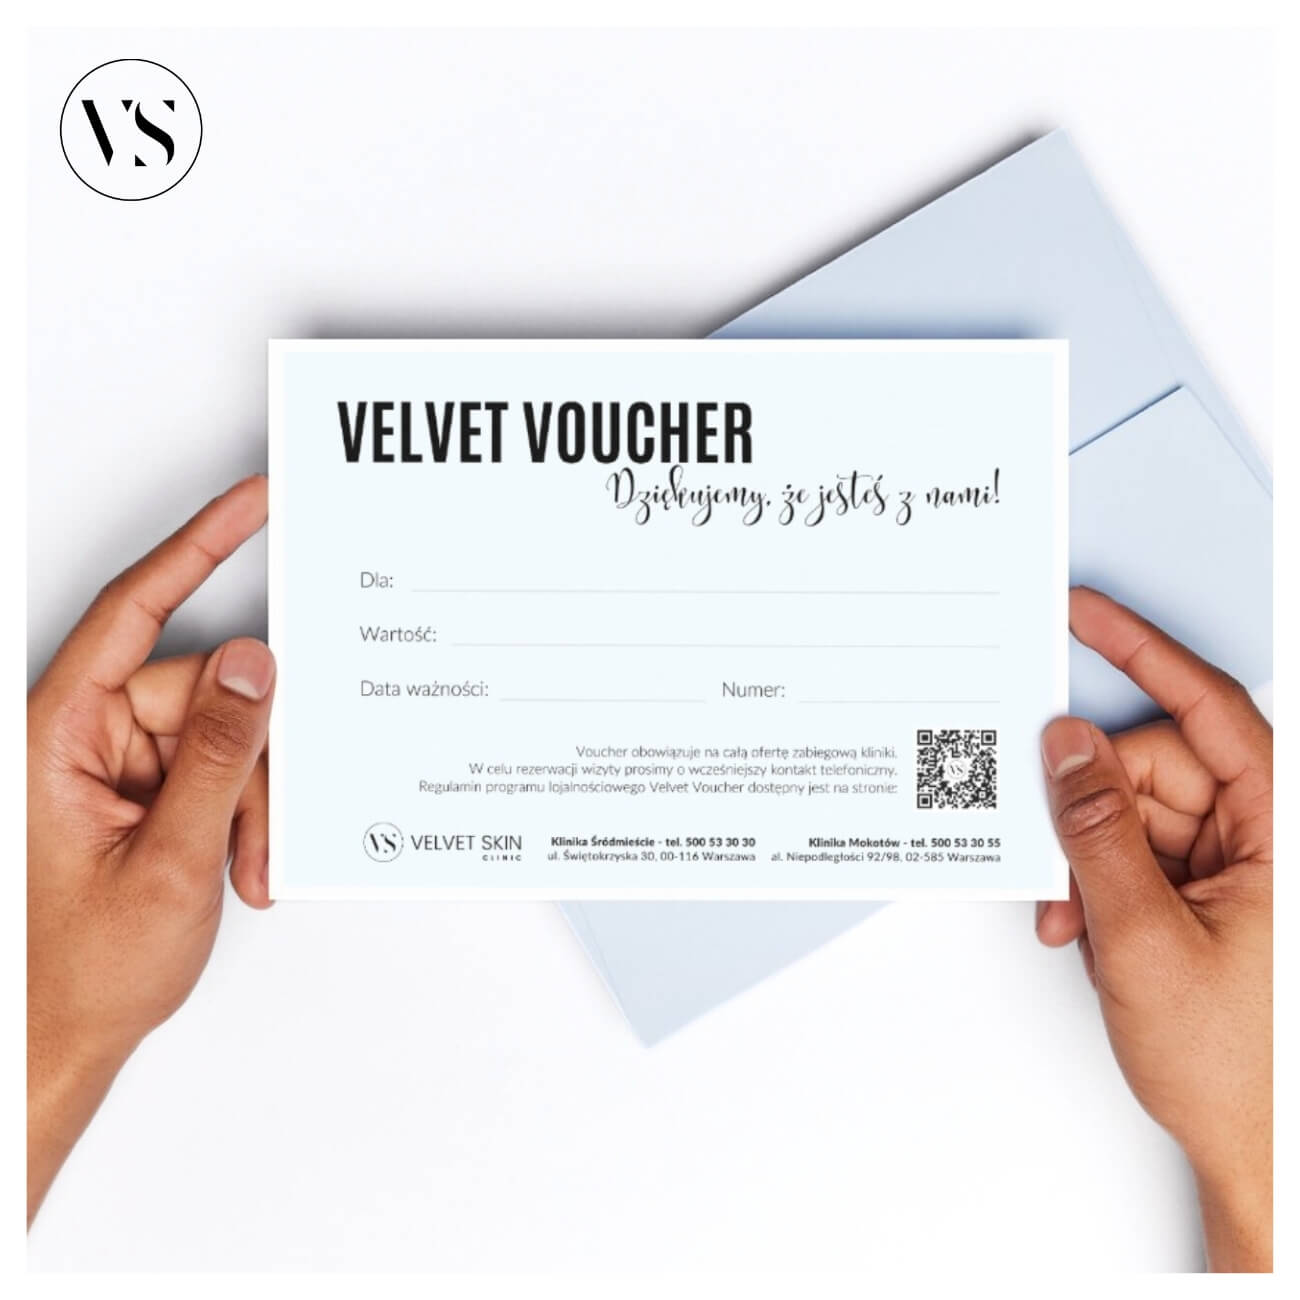 Velvet Voucher program lojalnościowy